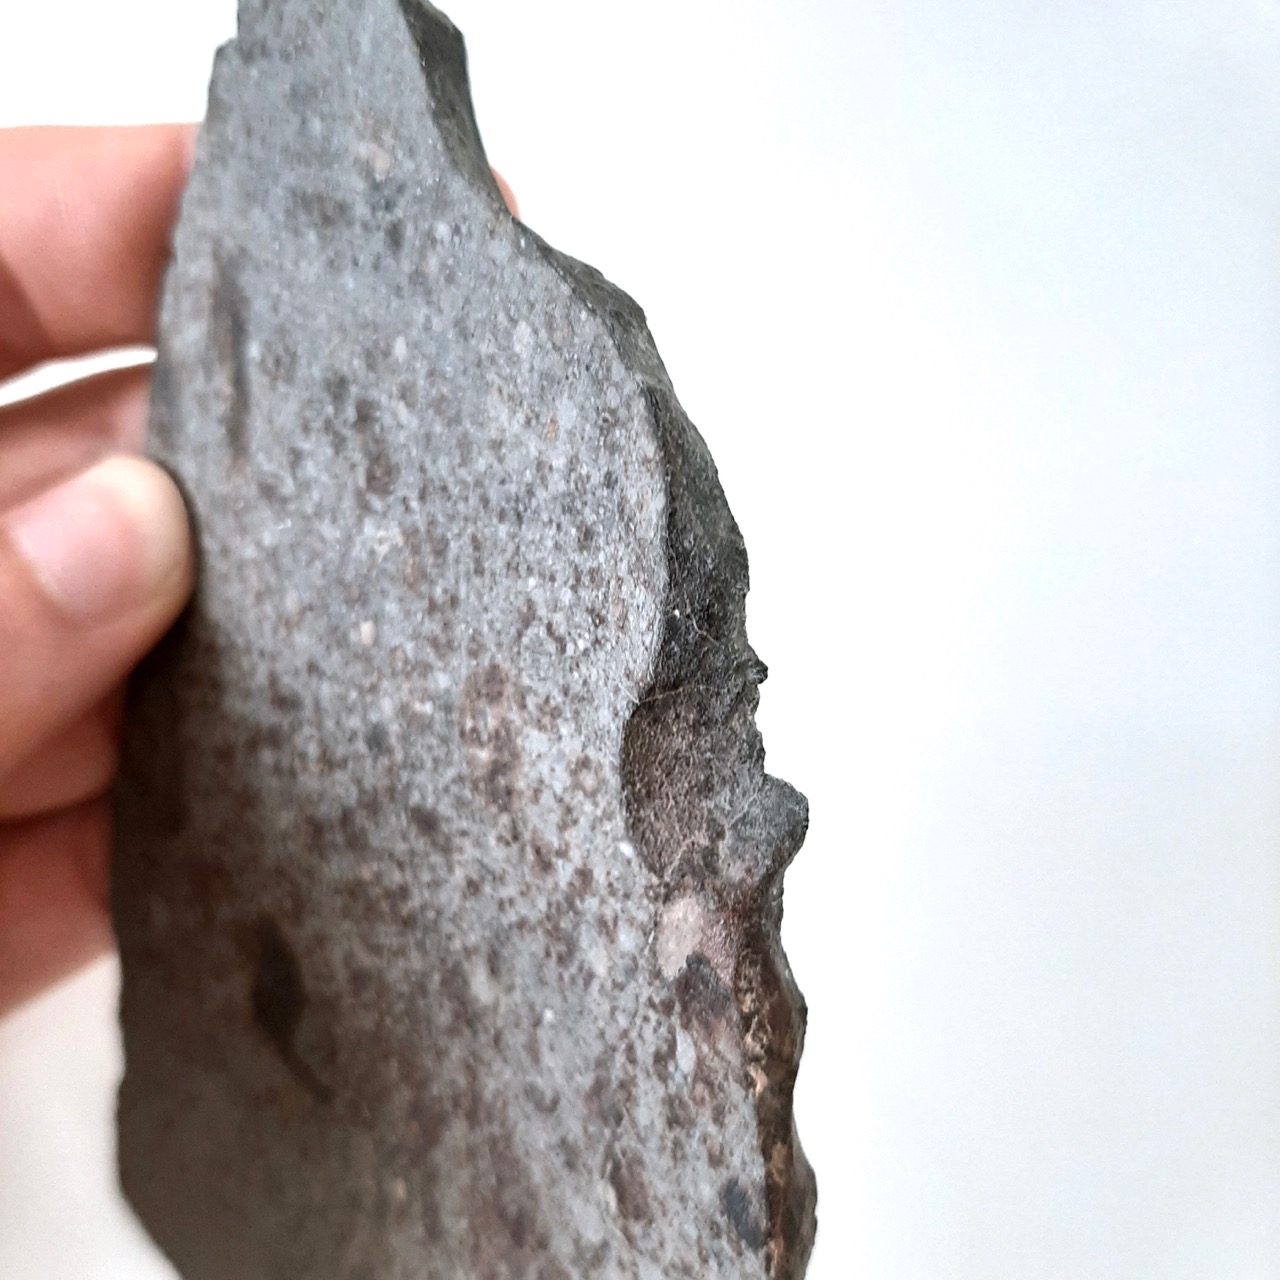 NWA 1495 meteorite. L4-5 chondrite.